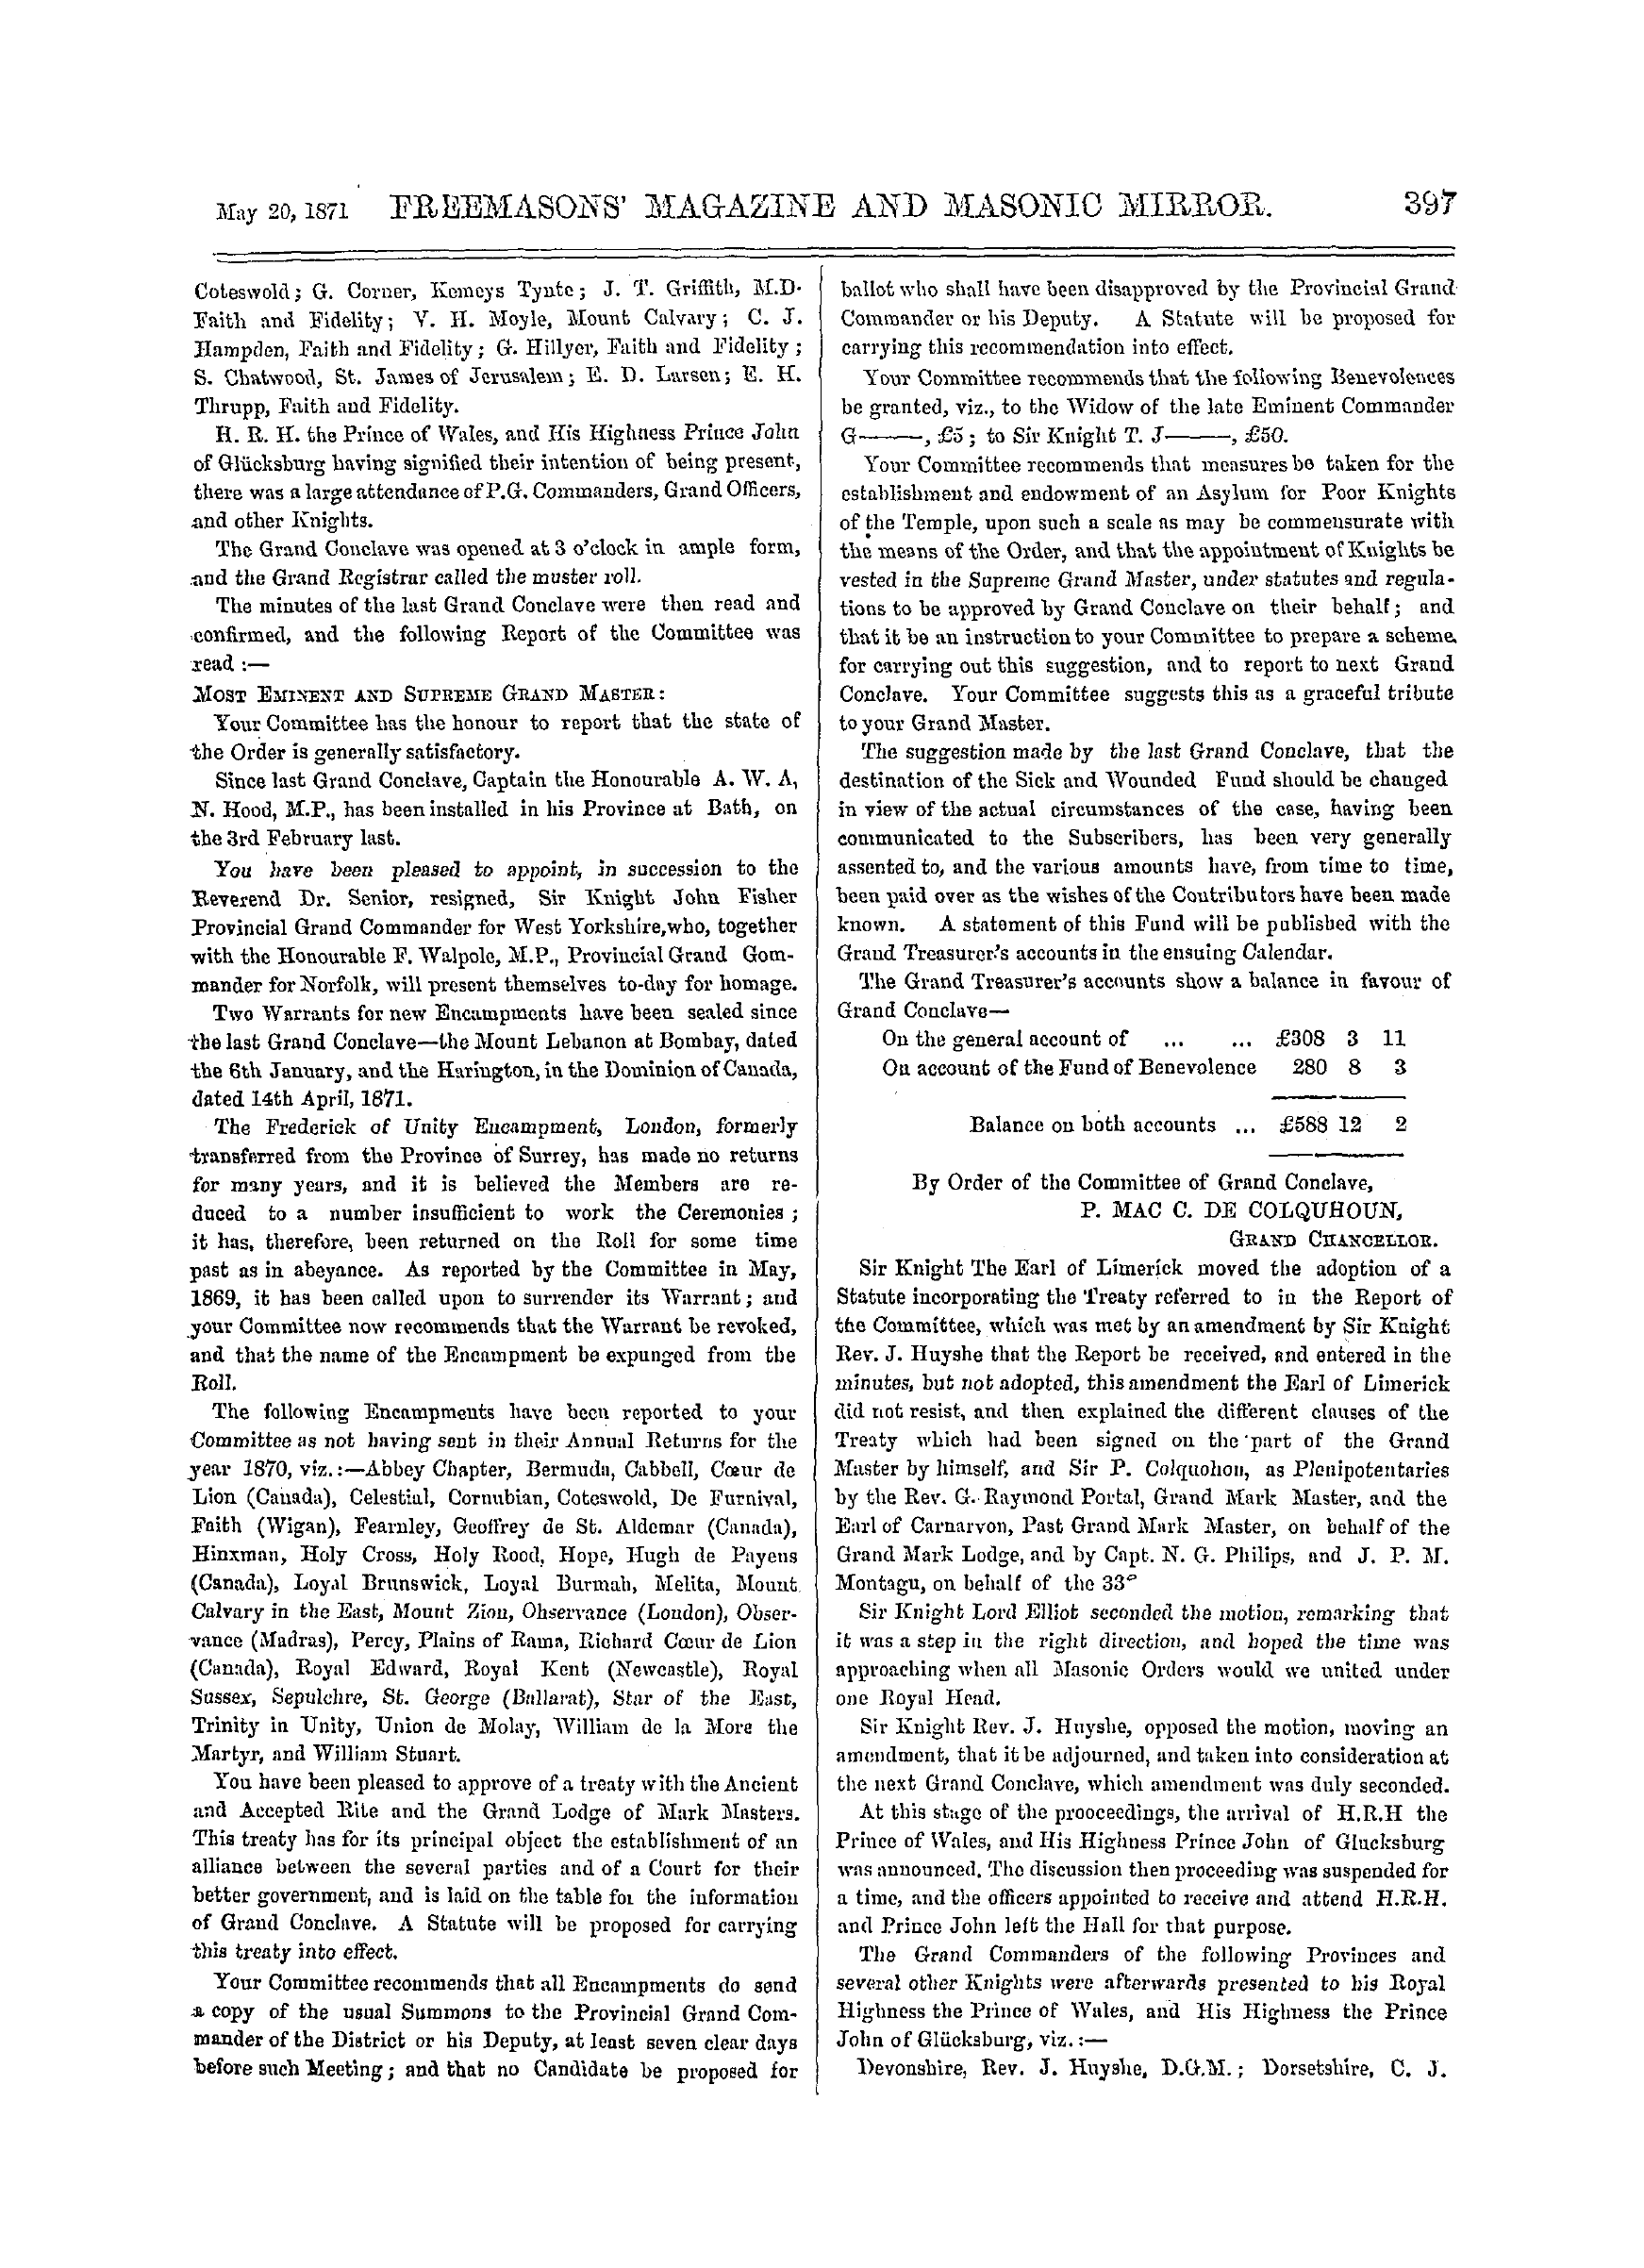 The Freemasons' Monthly Magazine: 1871-05-20 - Knights Templar.